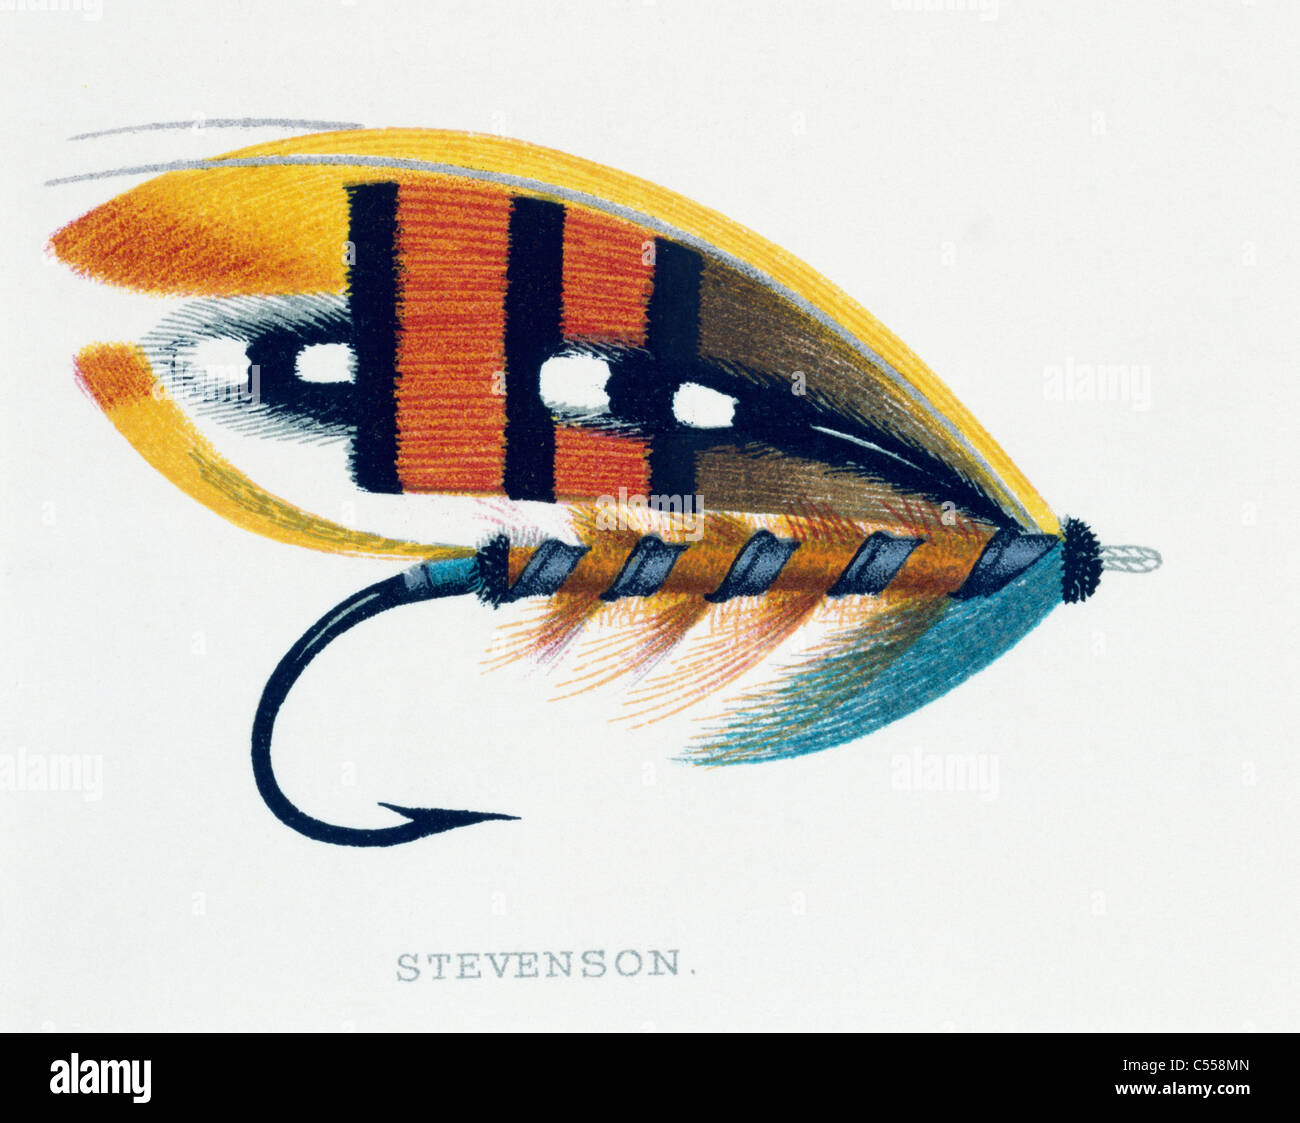 Stevenson Salmon Fly Banque D'Images